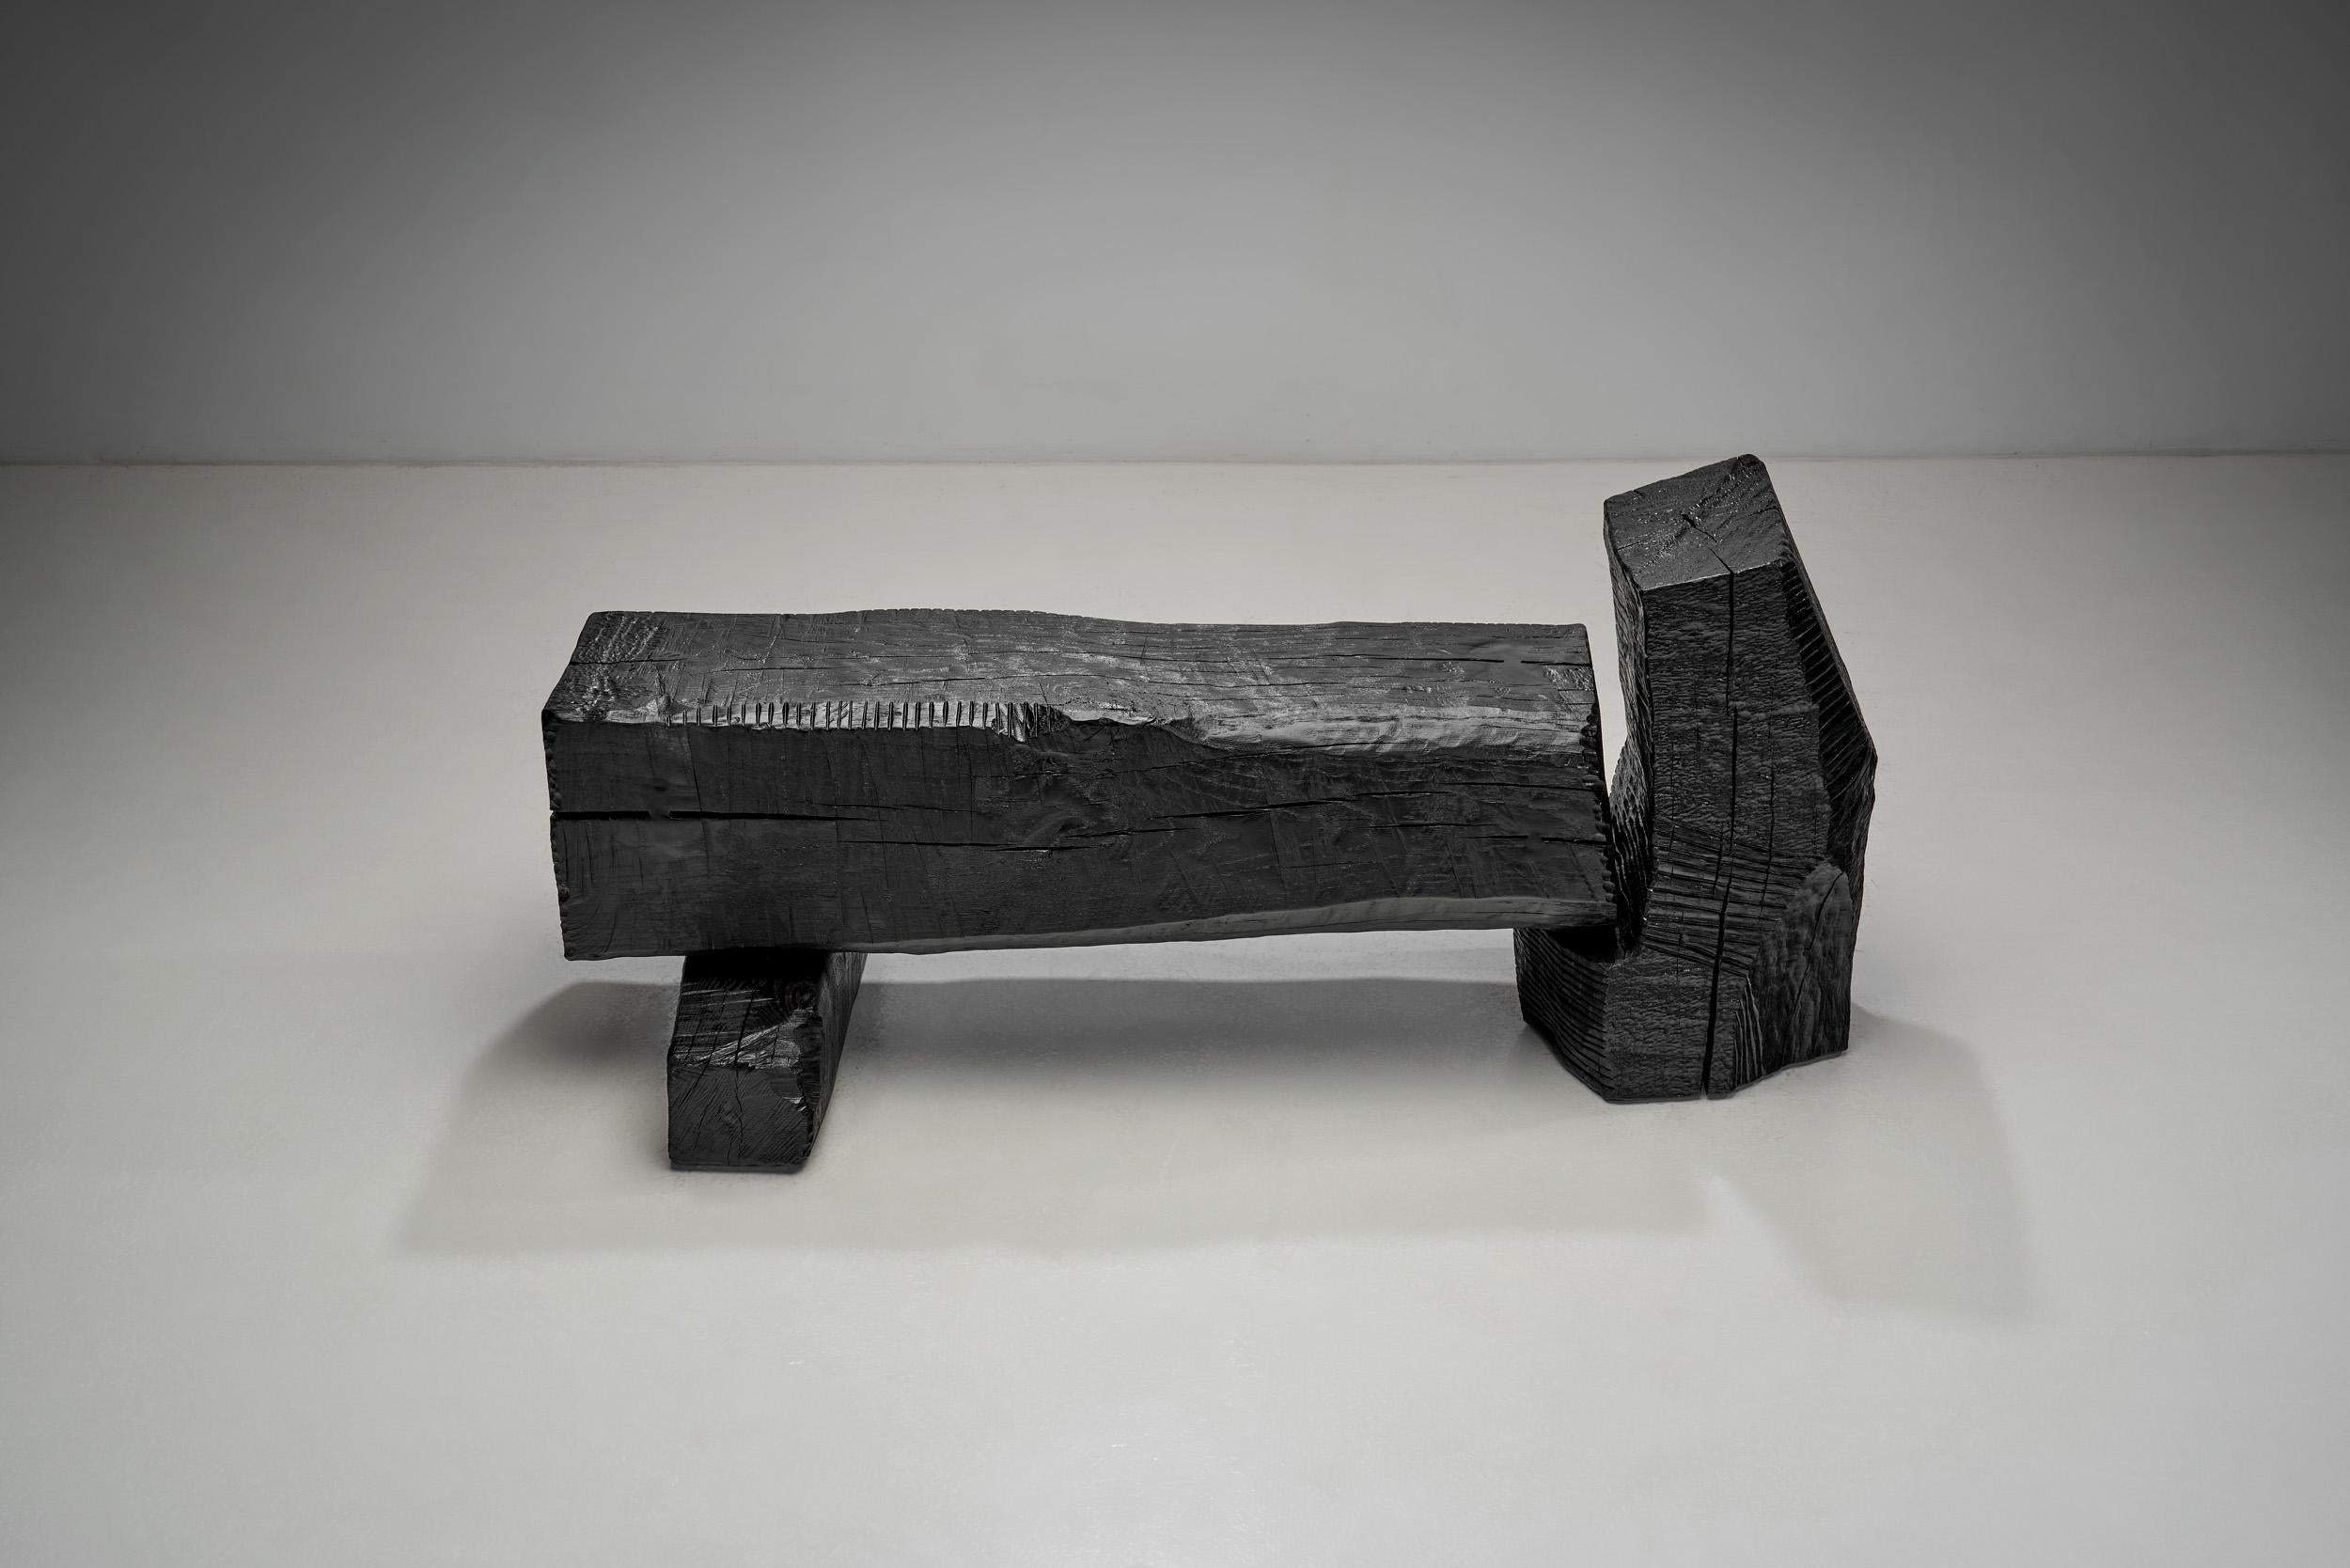 Contemporary Robin Berrewaerts Black Eboninzed Oak Bench, Belgium 21st Century For Sale